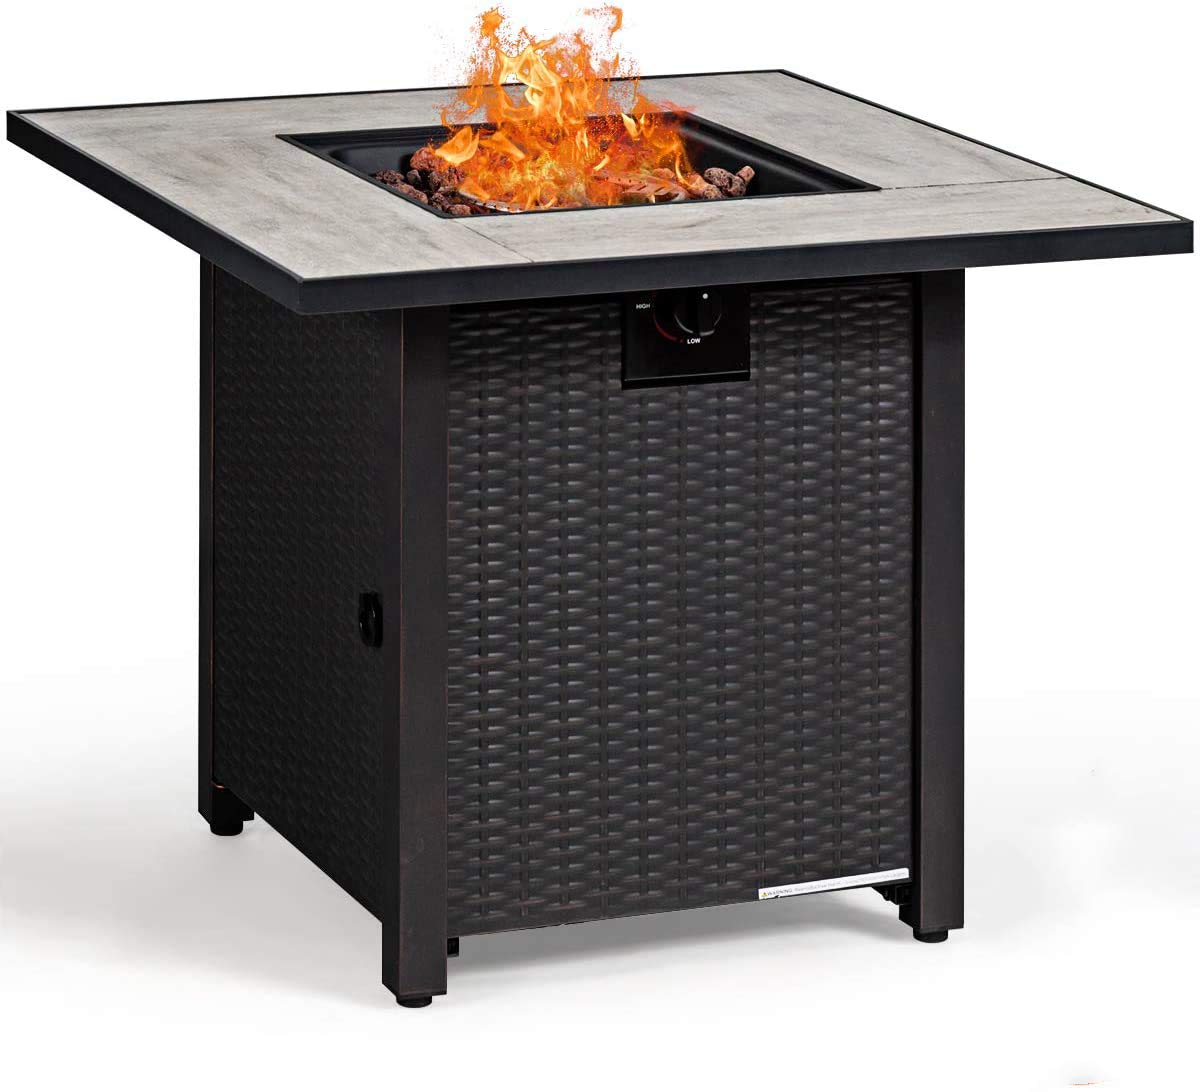 Giantex Propane Fire Pit Table, 30 inch 50,000 BTU Square Gas Firepits w/ Ceramic Tabletop